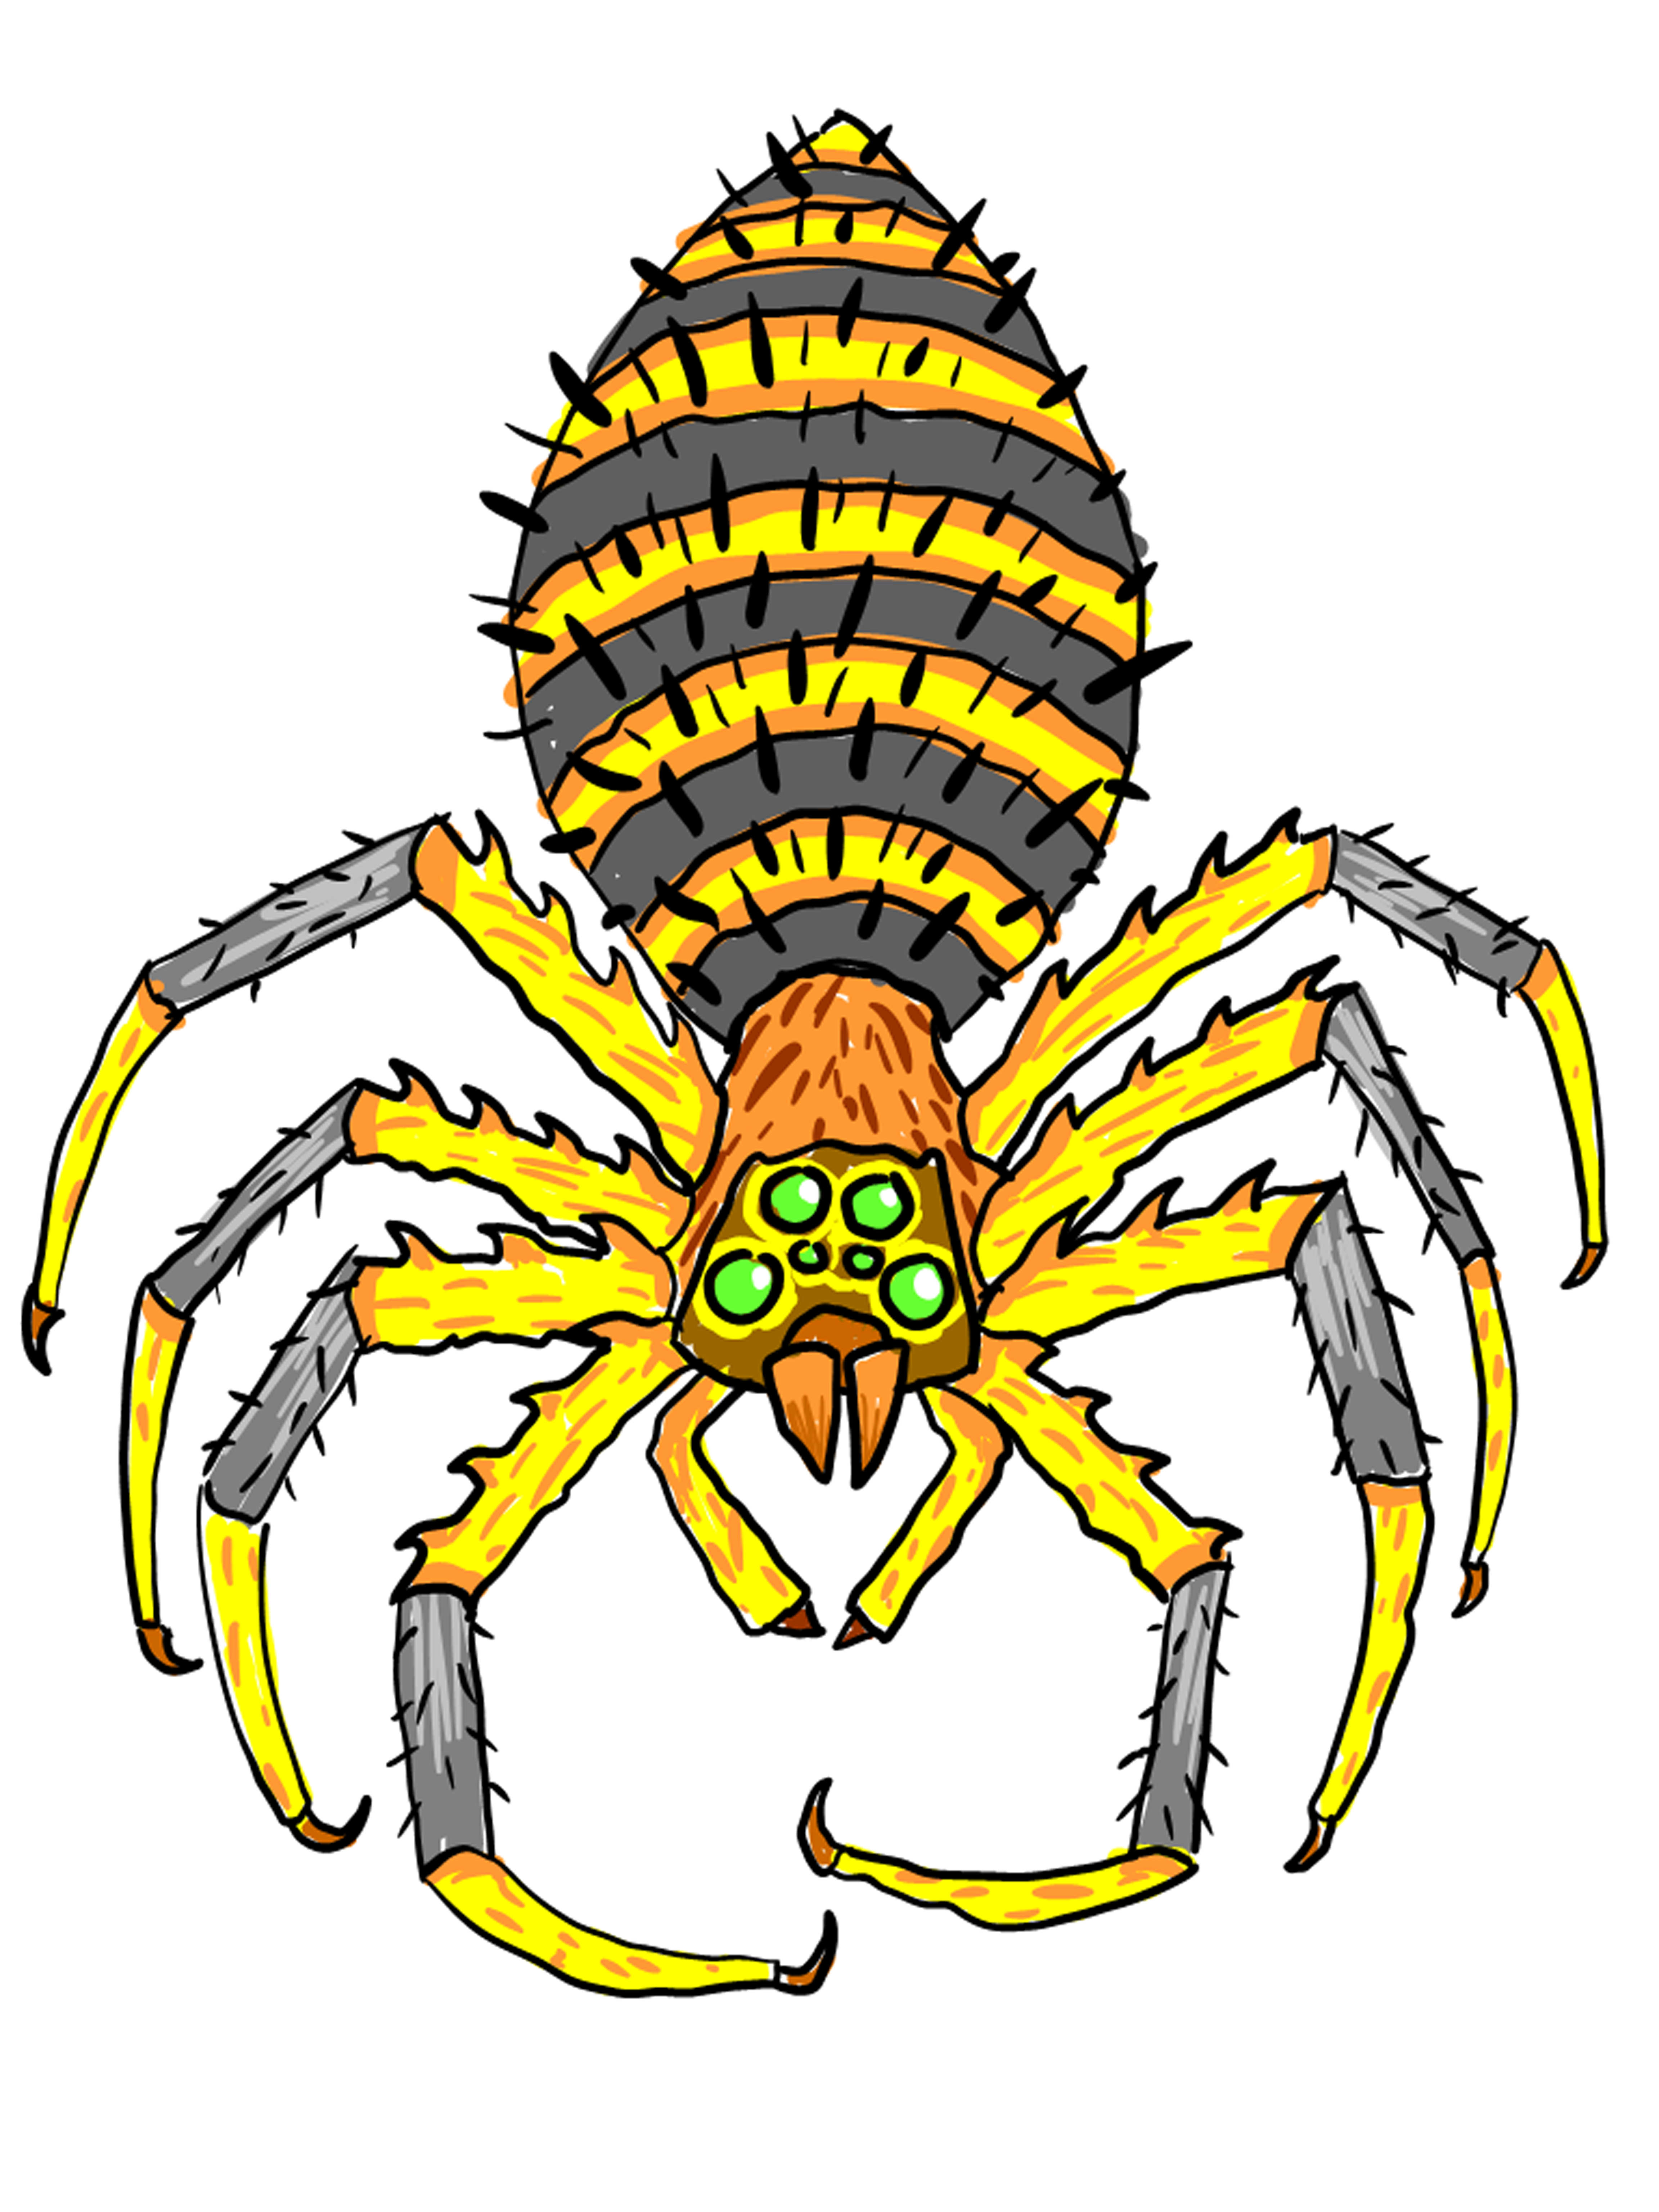 Spider | Free Images at Clker.com - vector clip art online, royalty